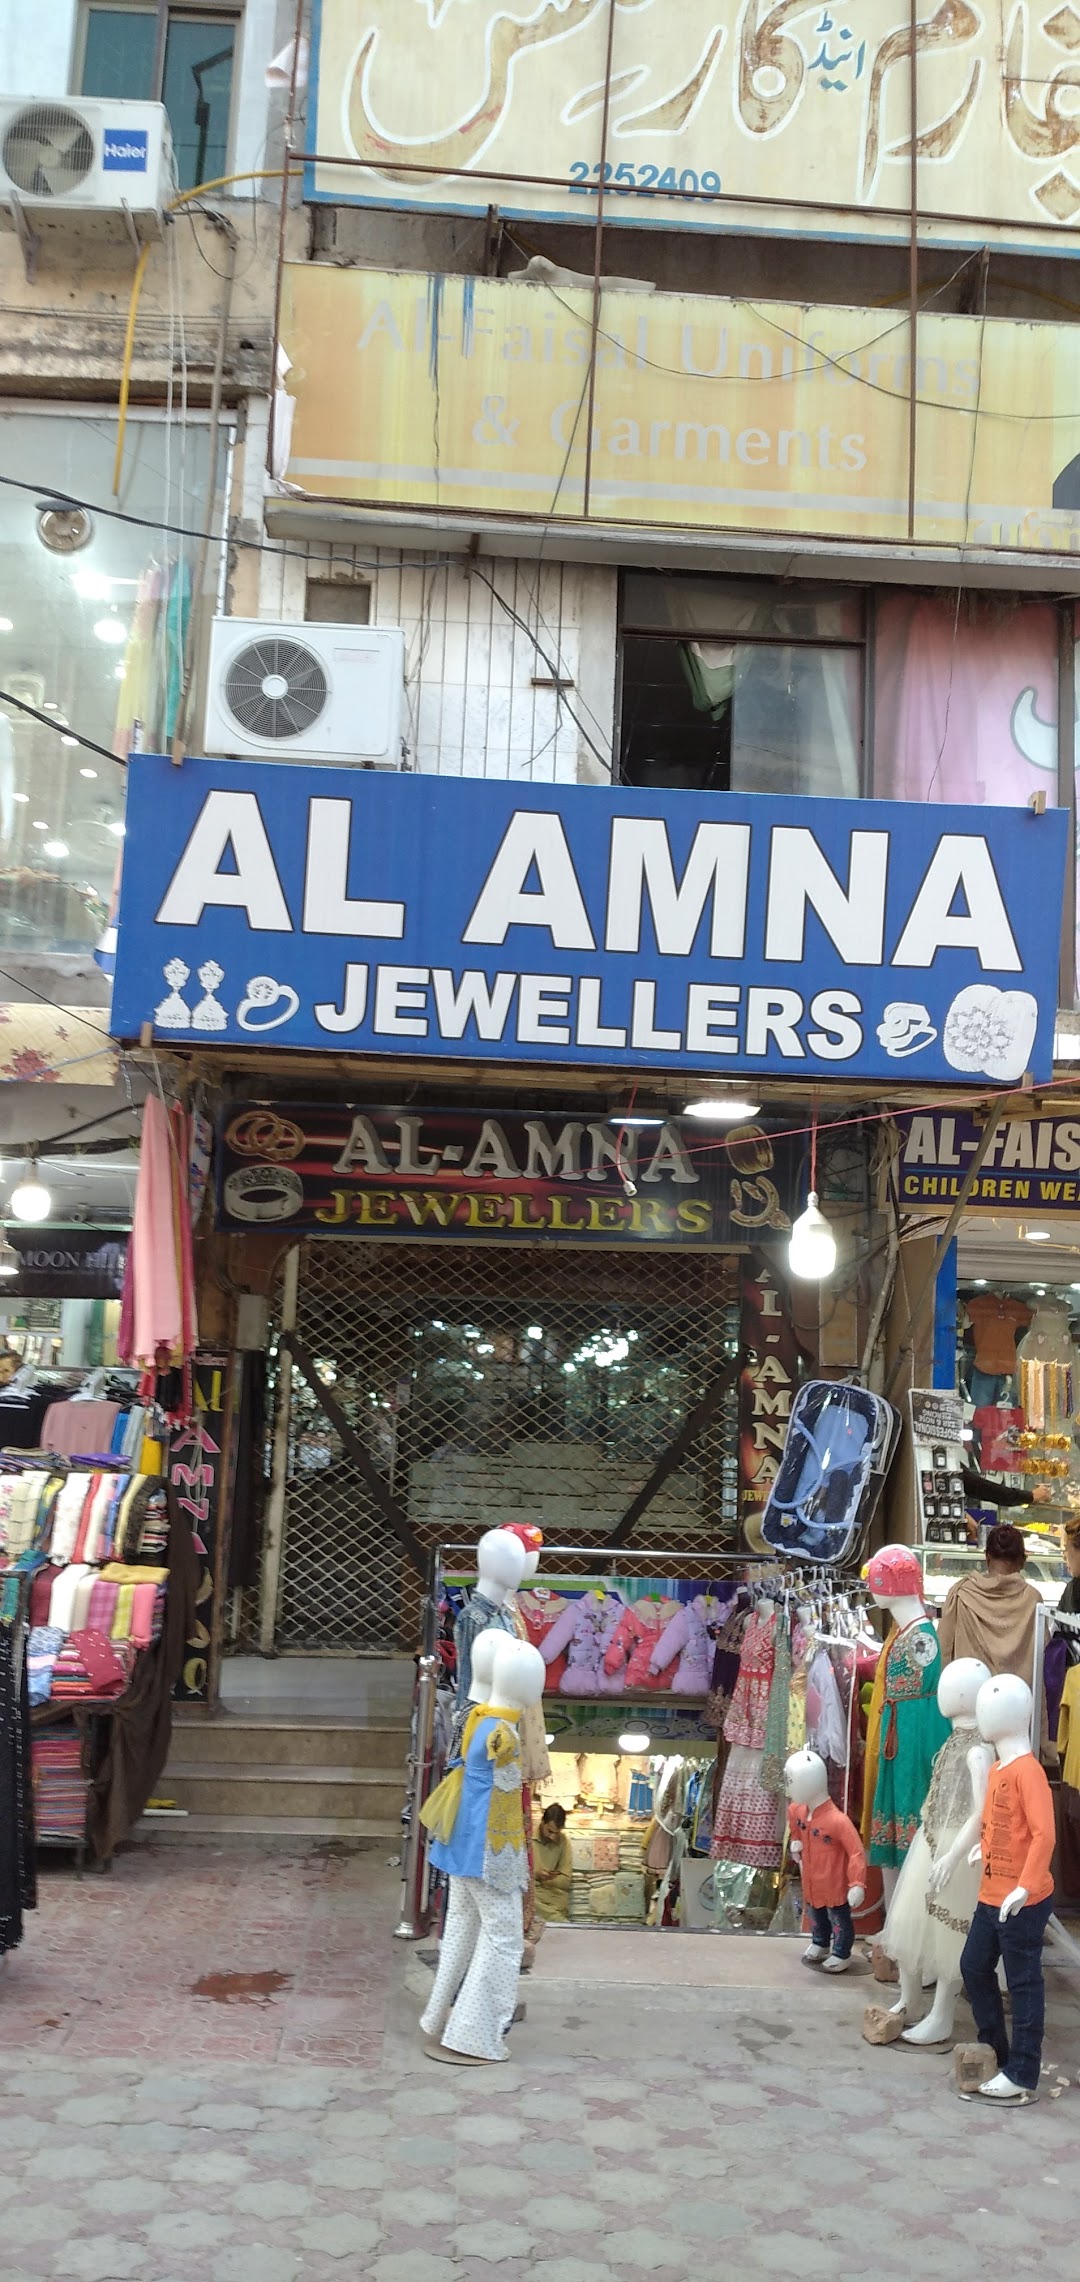 Al-Amina Jewellers